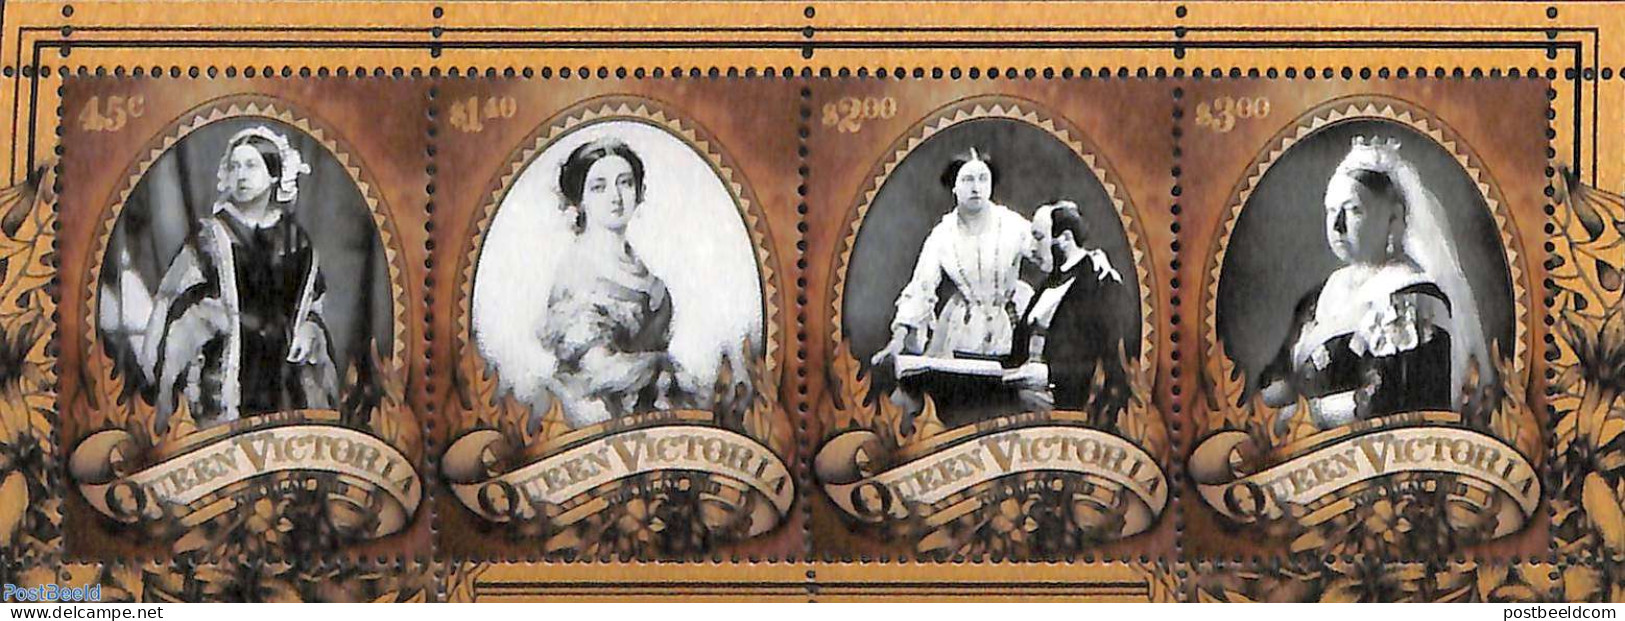 Tokelau Islands 2019 Queen Victoria 4v M/s, Mint NH, History - Kings & Queens (Royalty) - Royalties, Royals